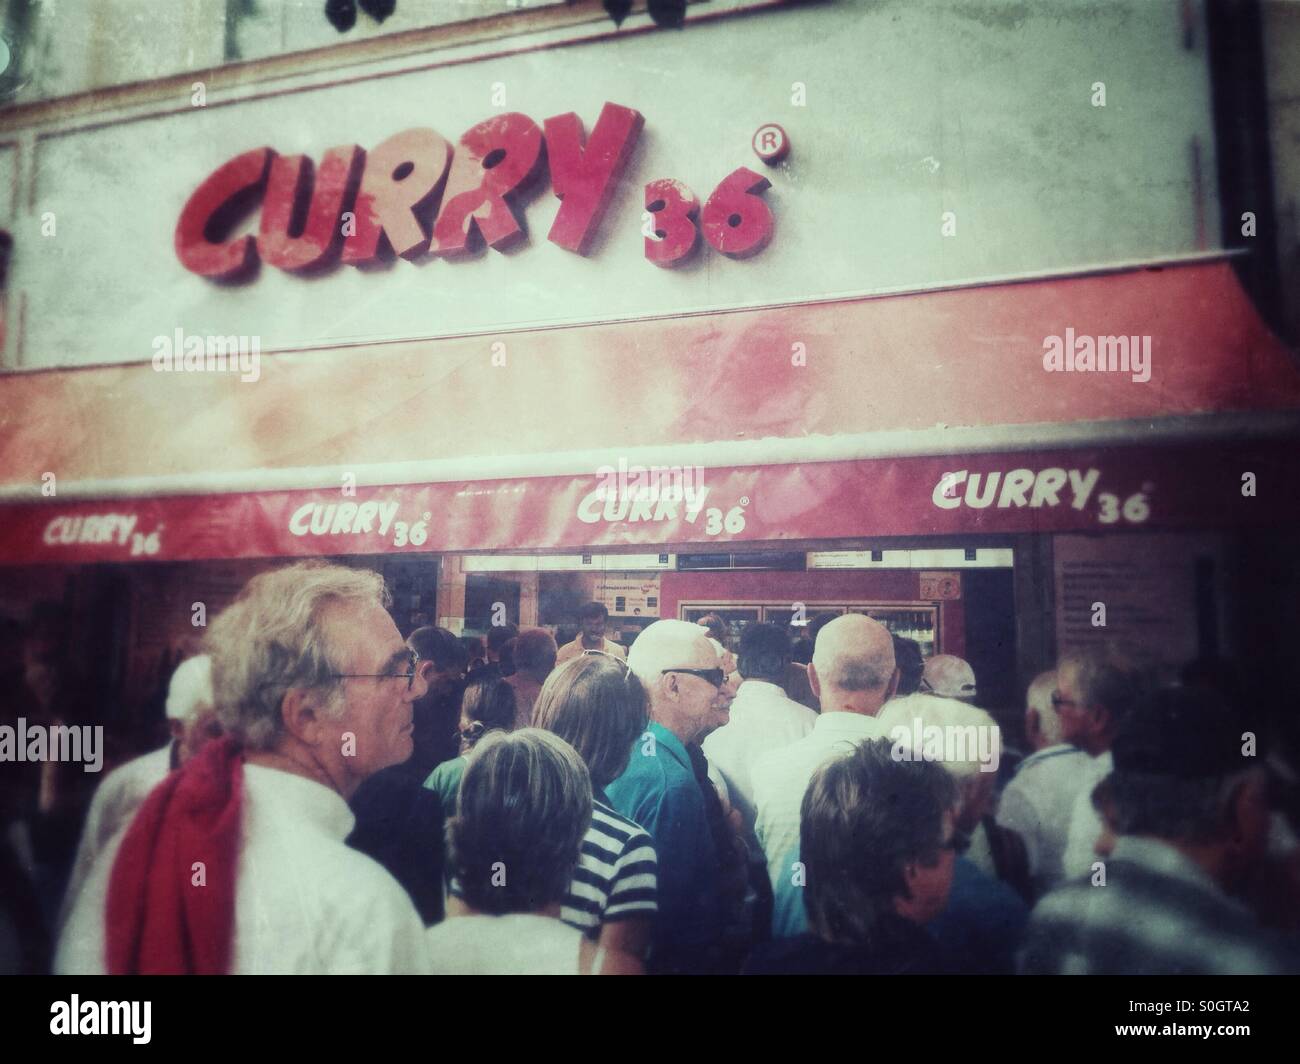 Curry 36 Stockfoto